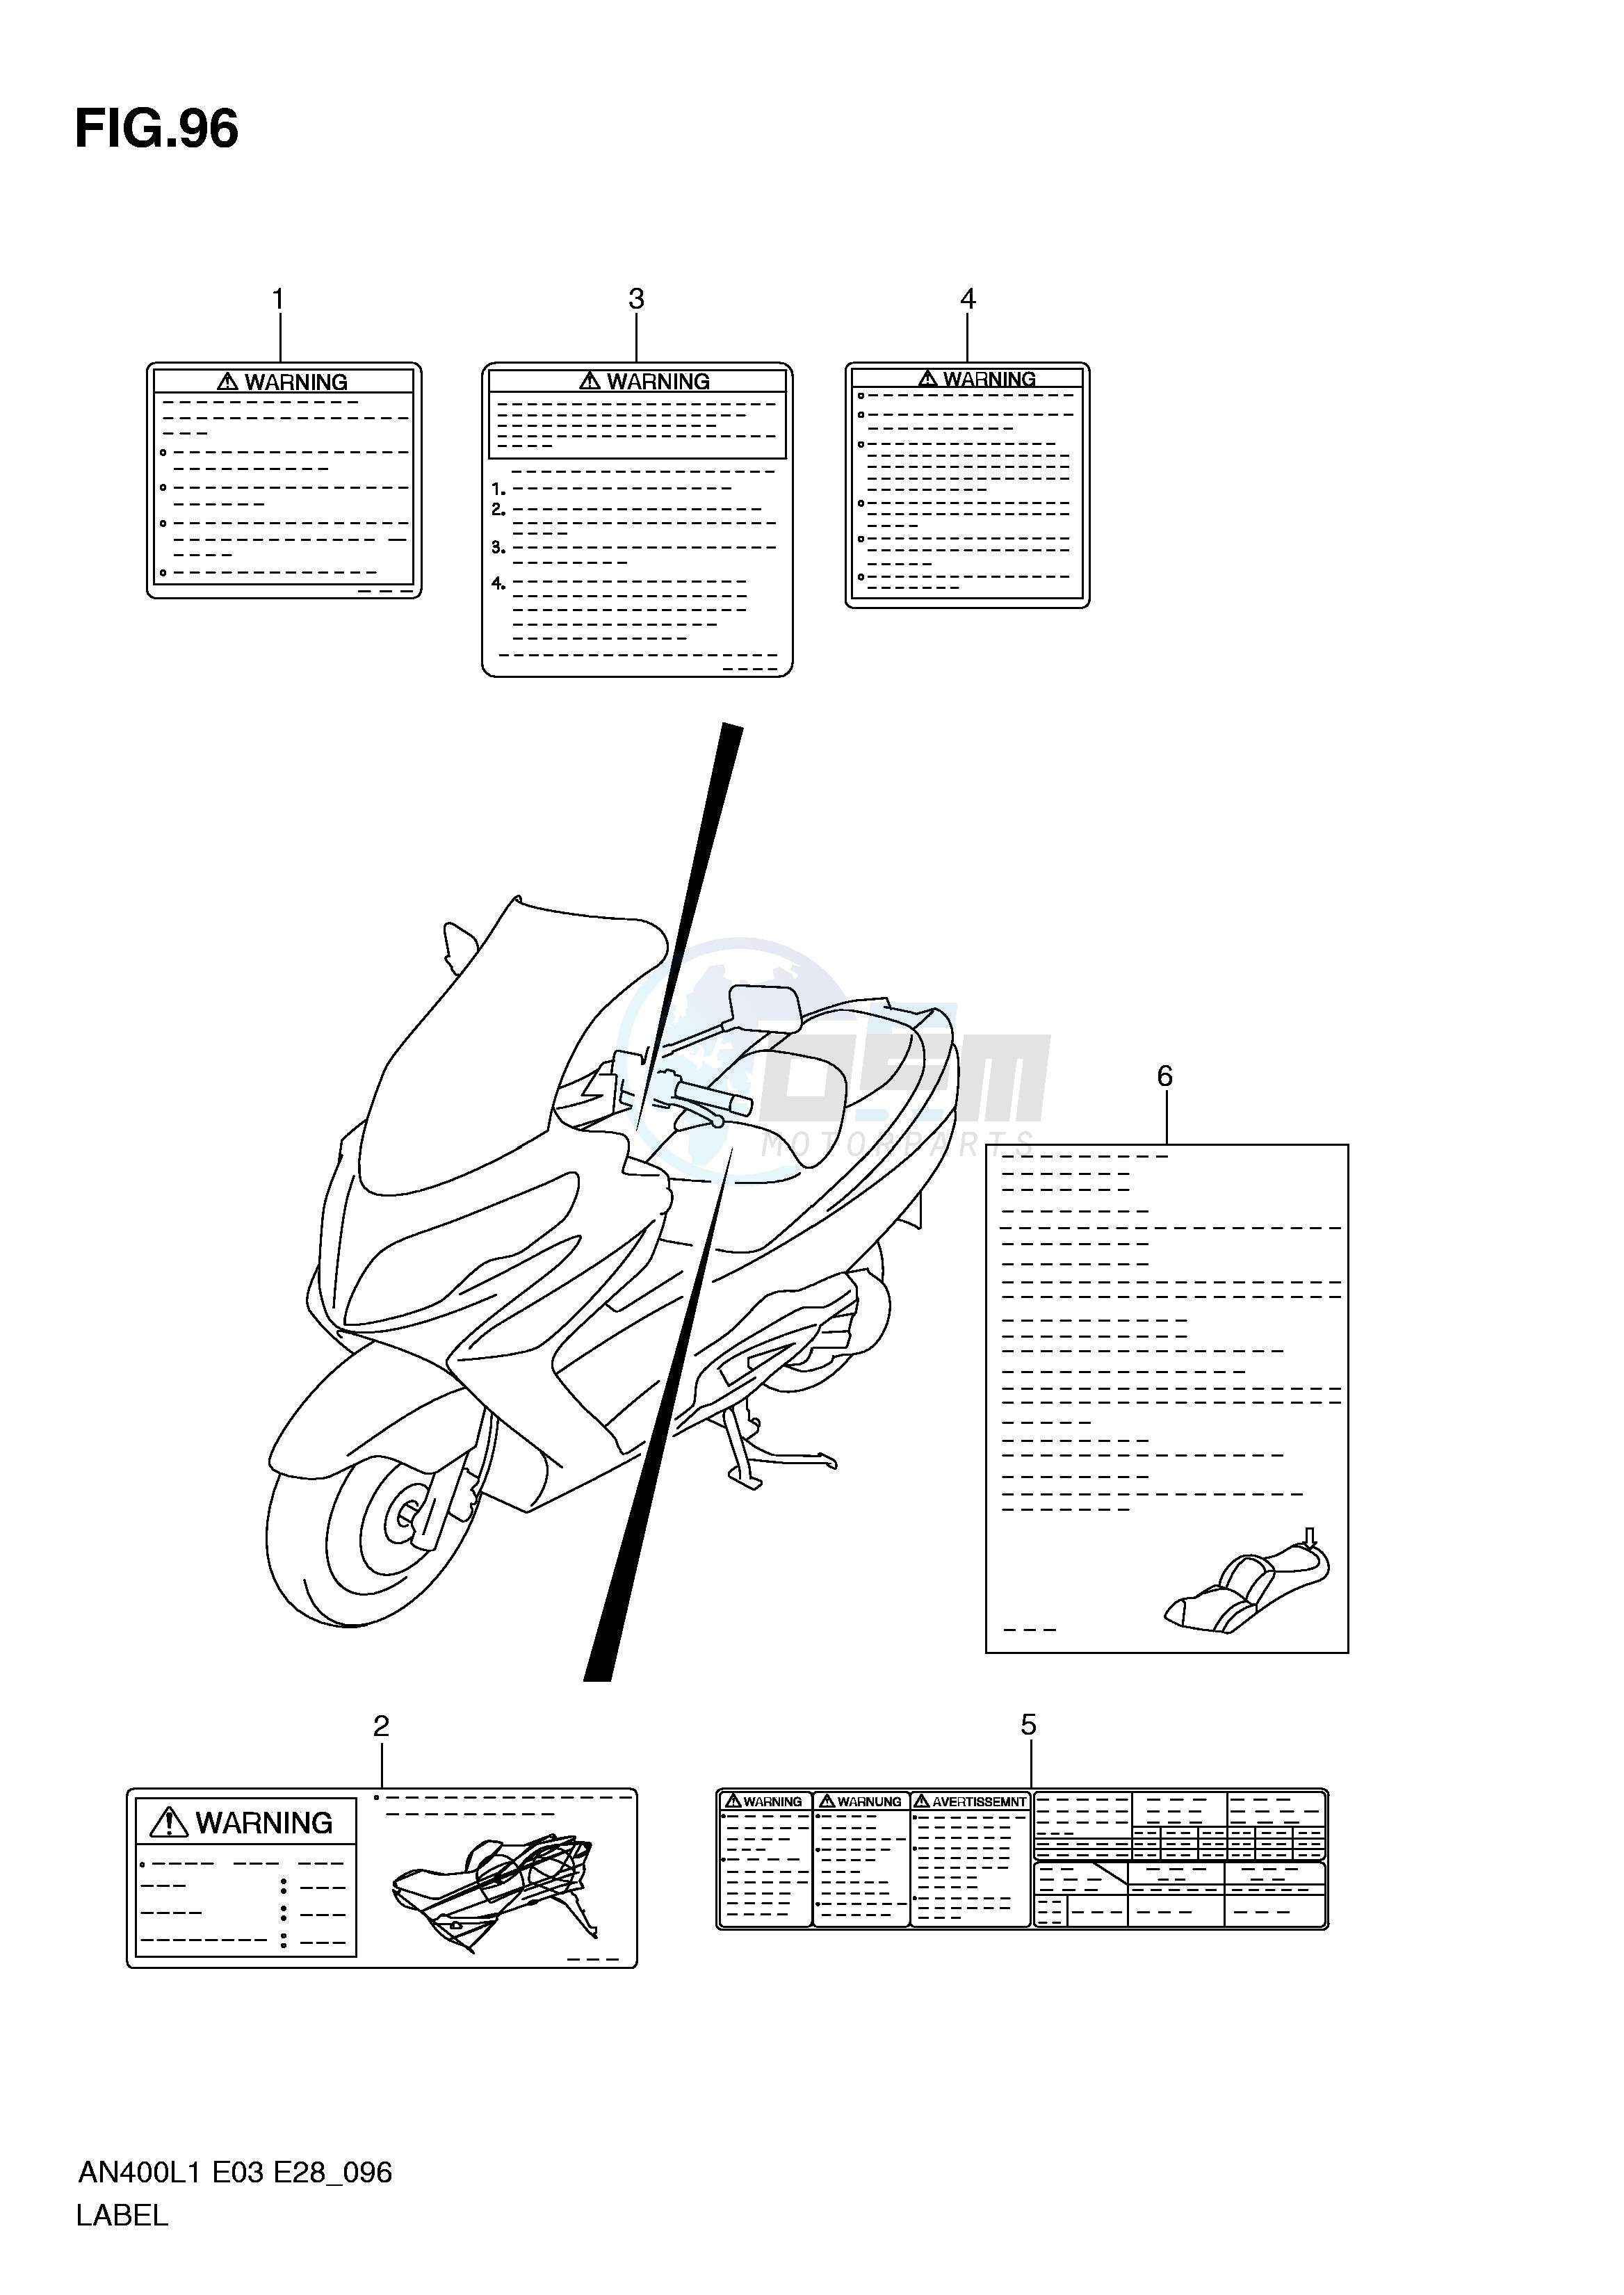 LABEL (AN400ZAL1 E28) blueprint